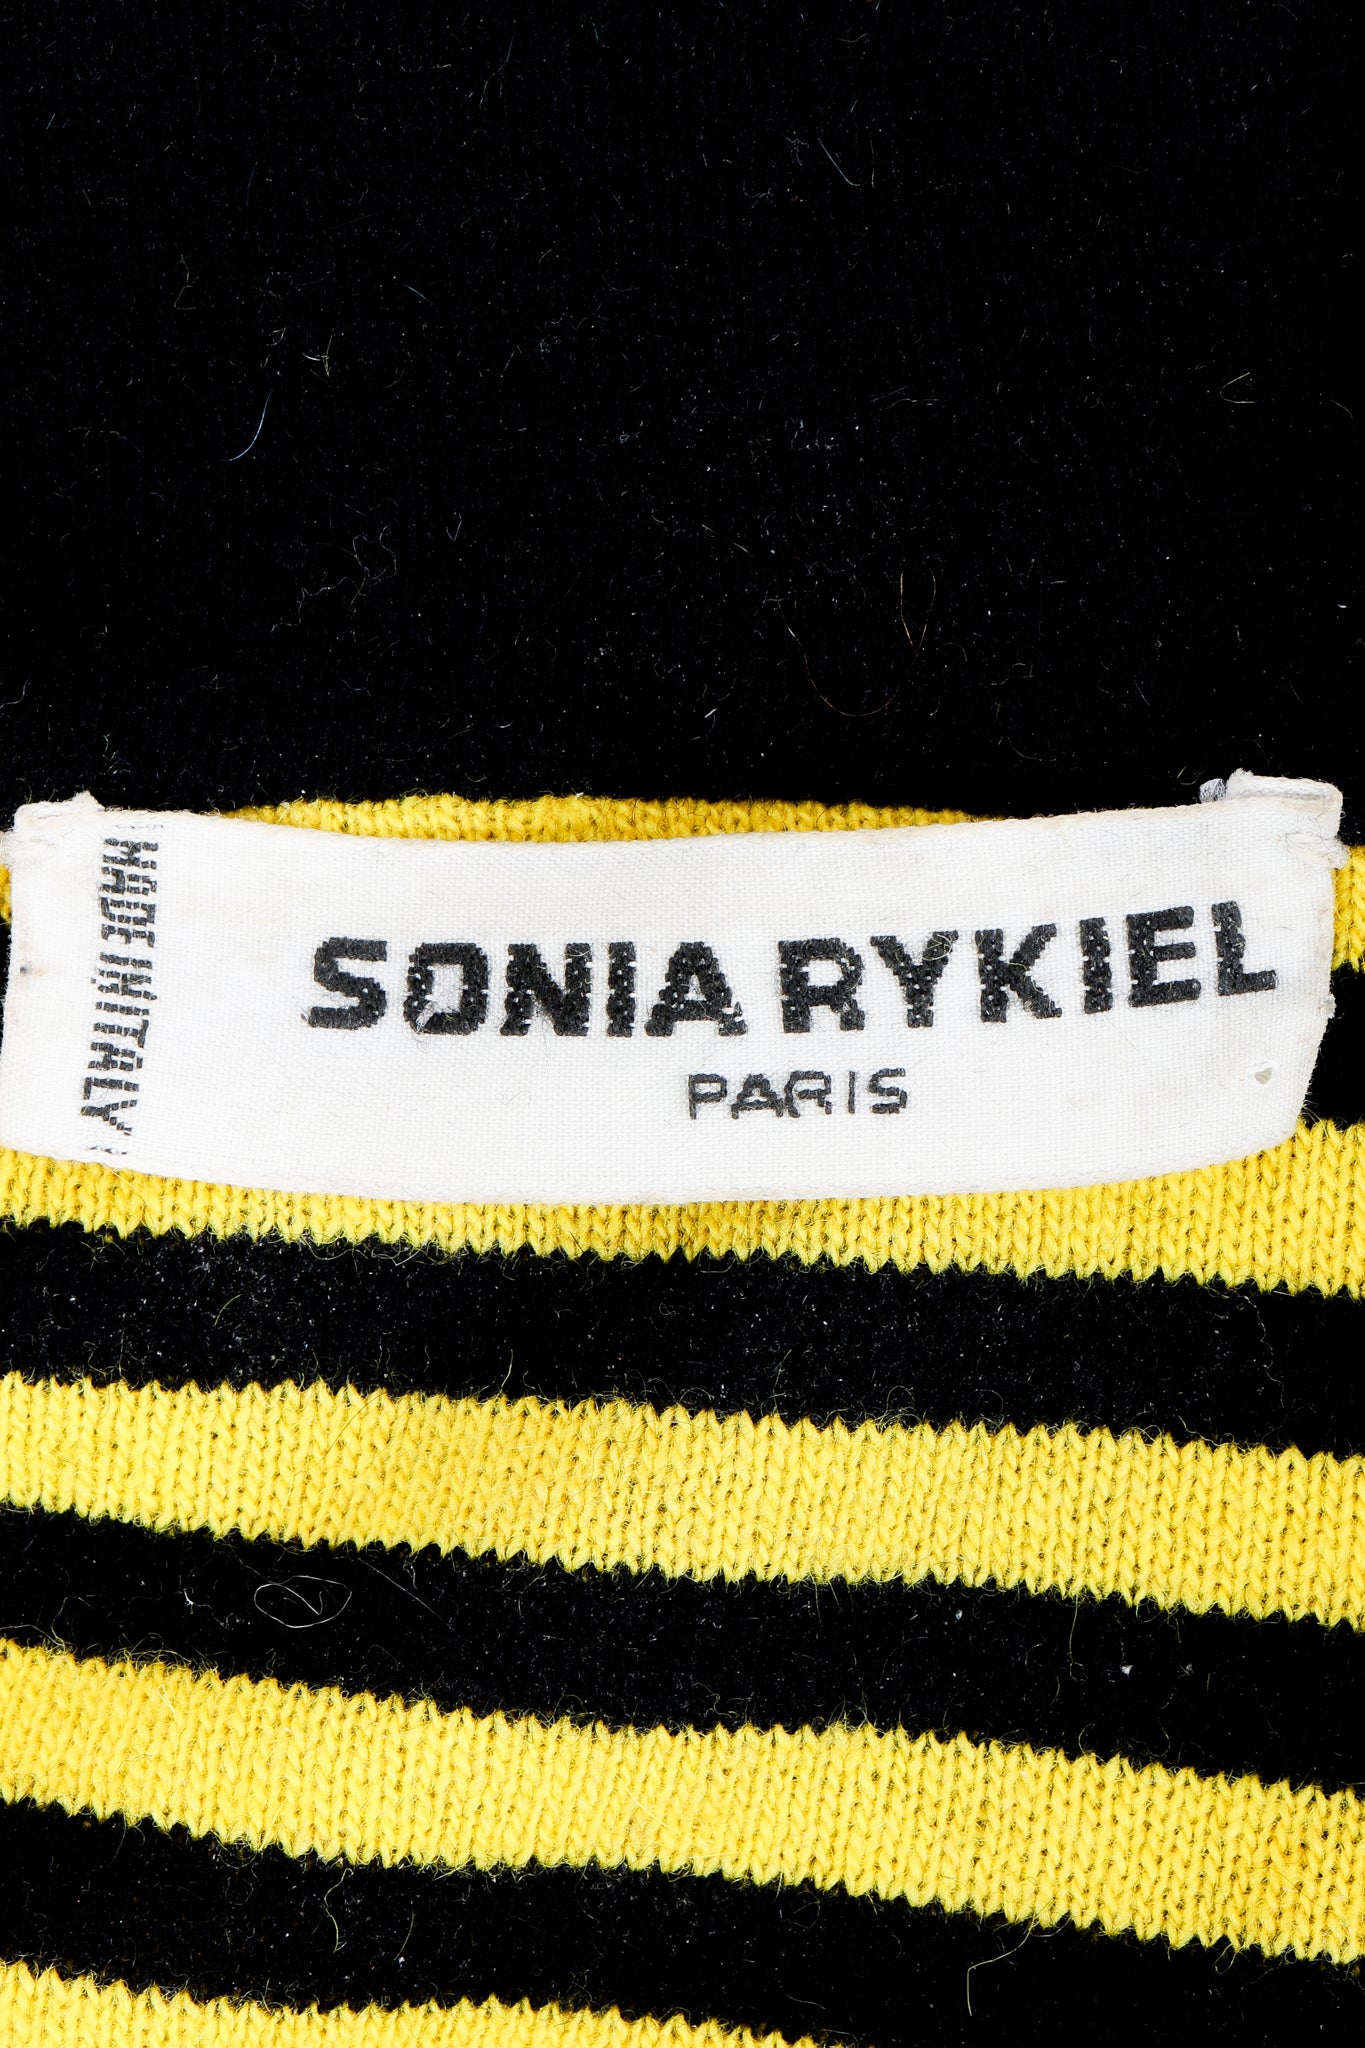 Vintage Sonia Rykiel label on stripes